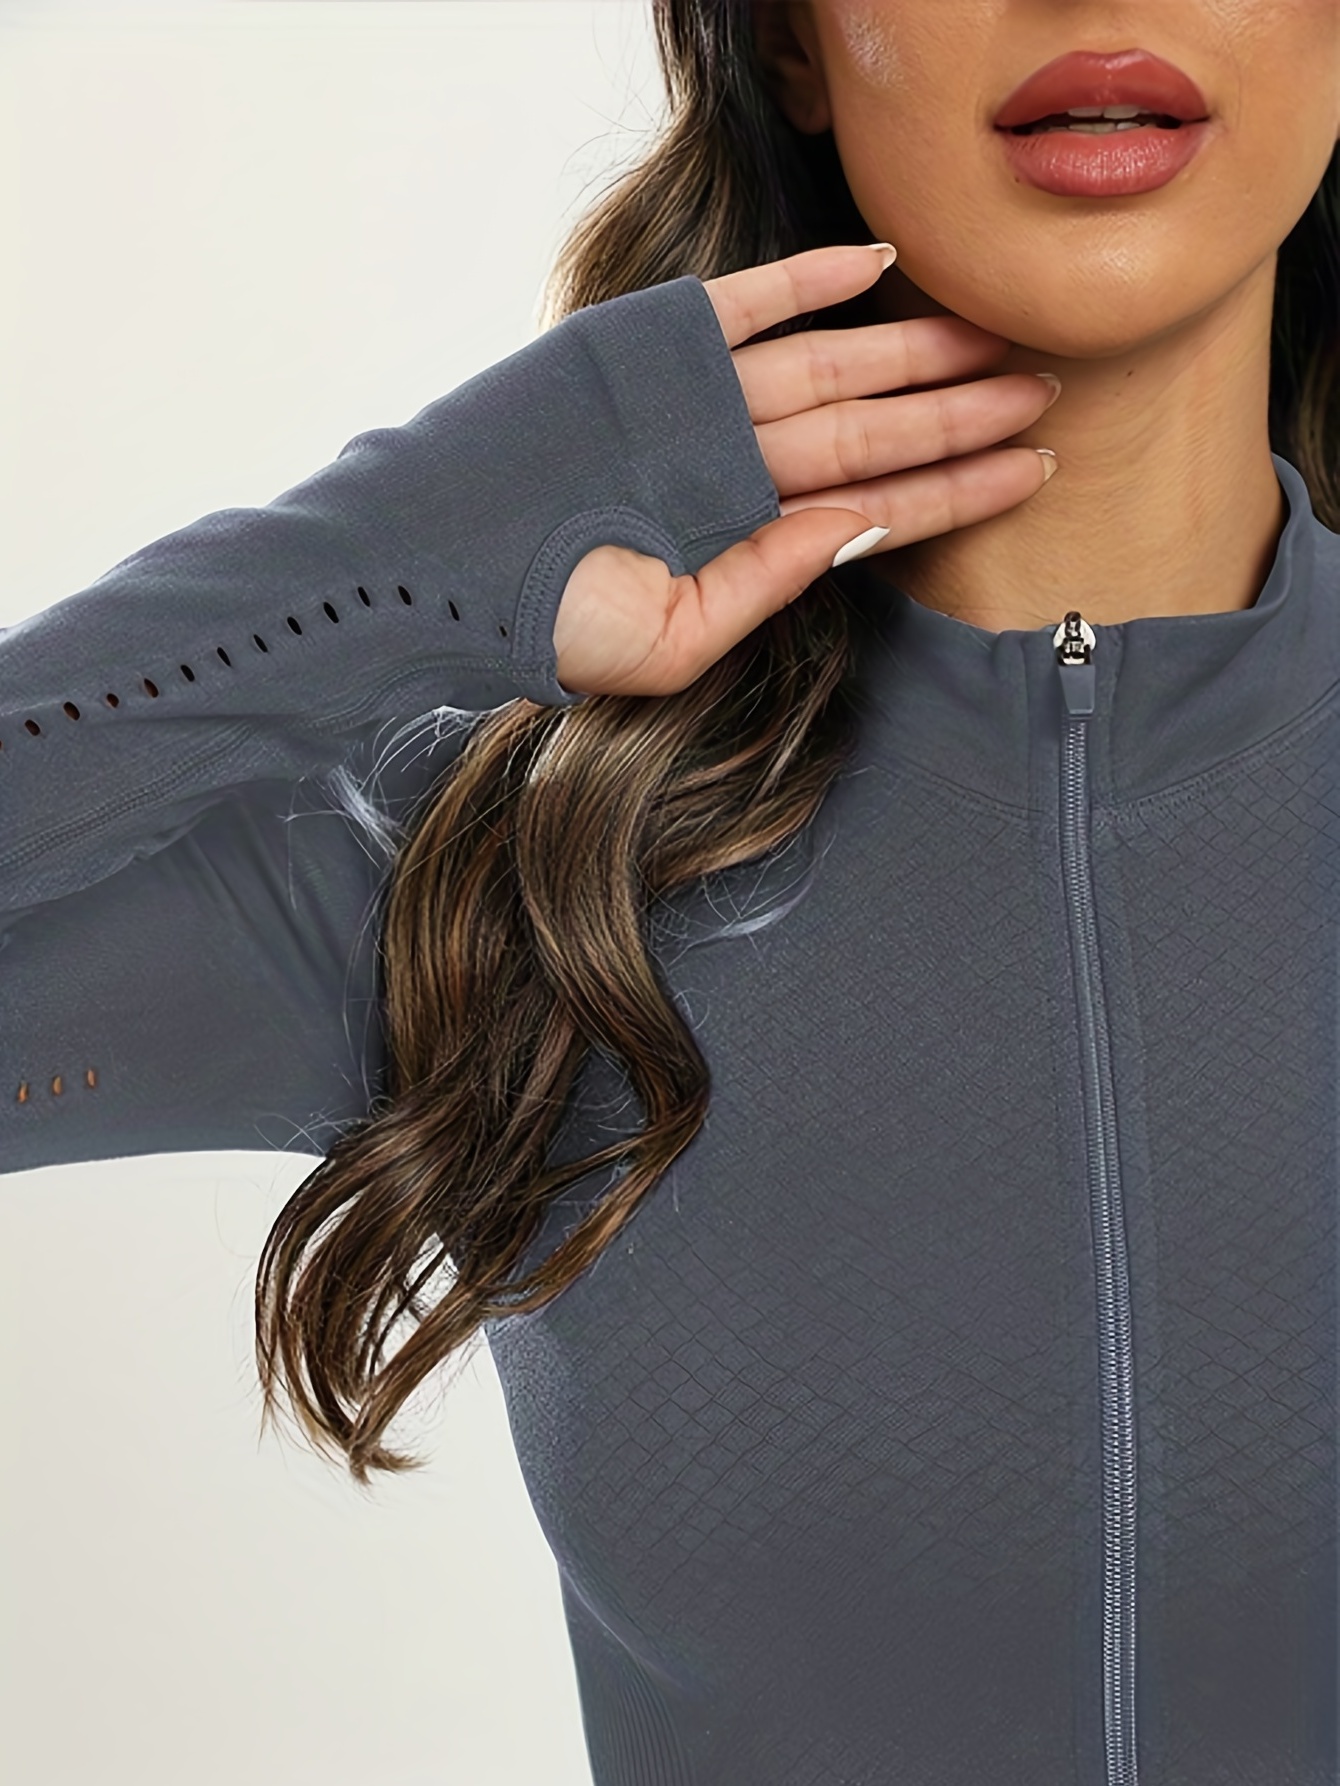 ALO Yoga Coolfit Long Sleeve Women's Black Gray Full Zip Jacket Sz Large